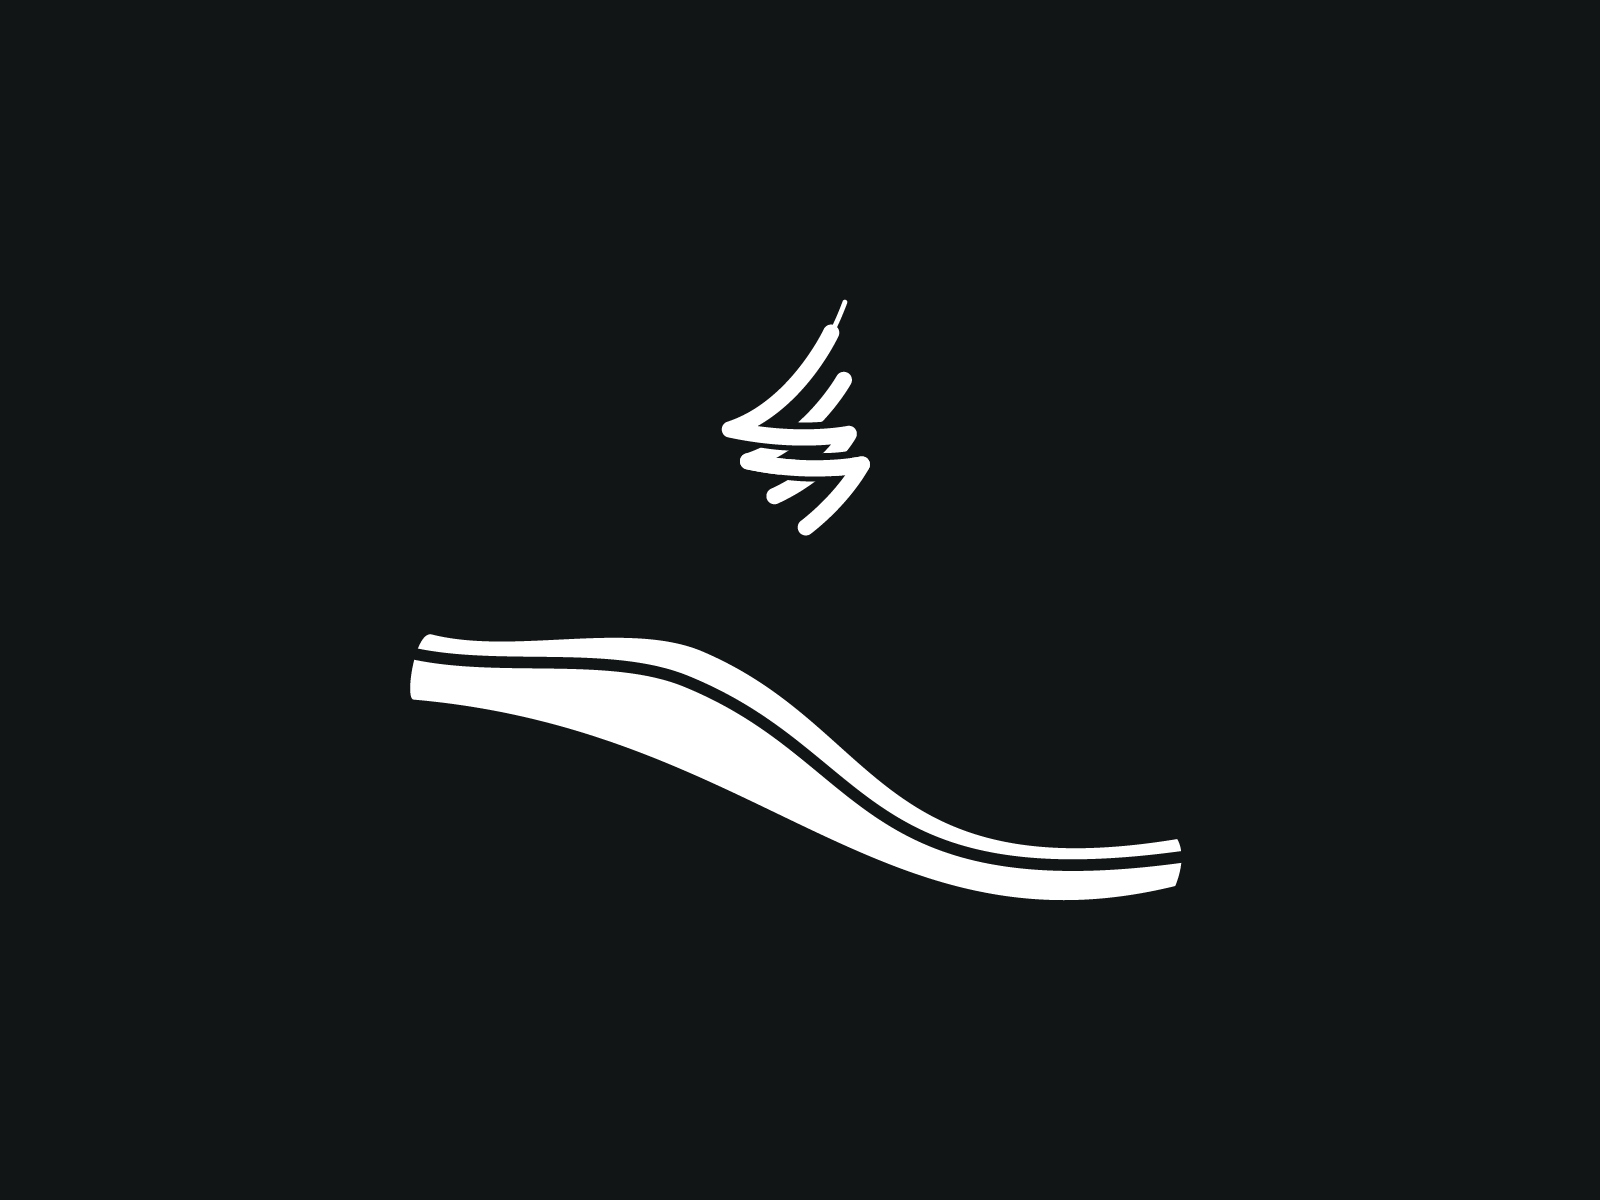 Sneaker logo design - Branding identity by Amine on Dribbble